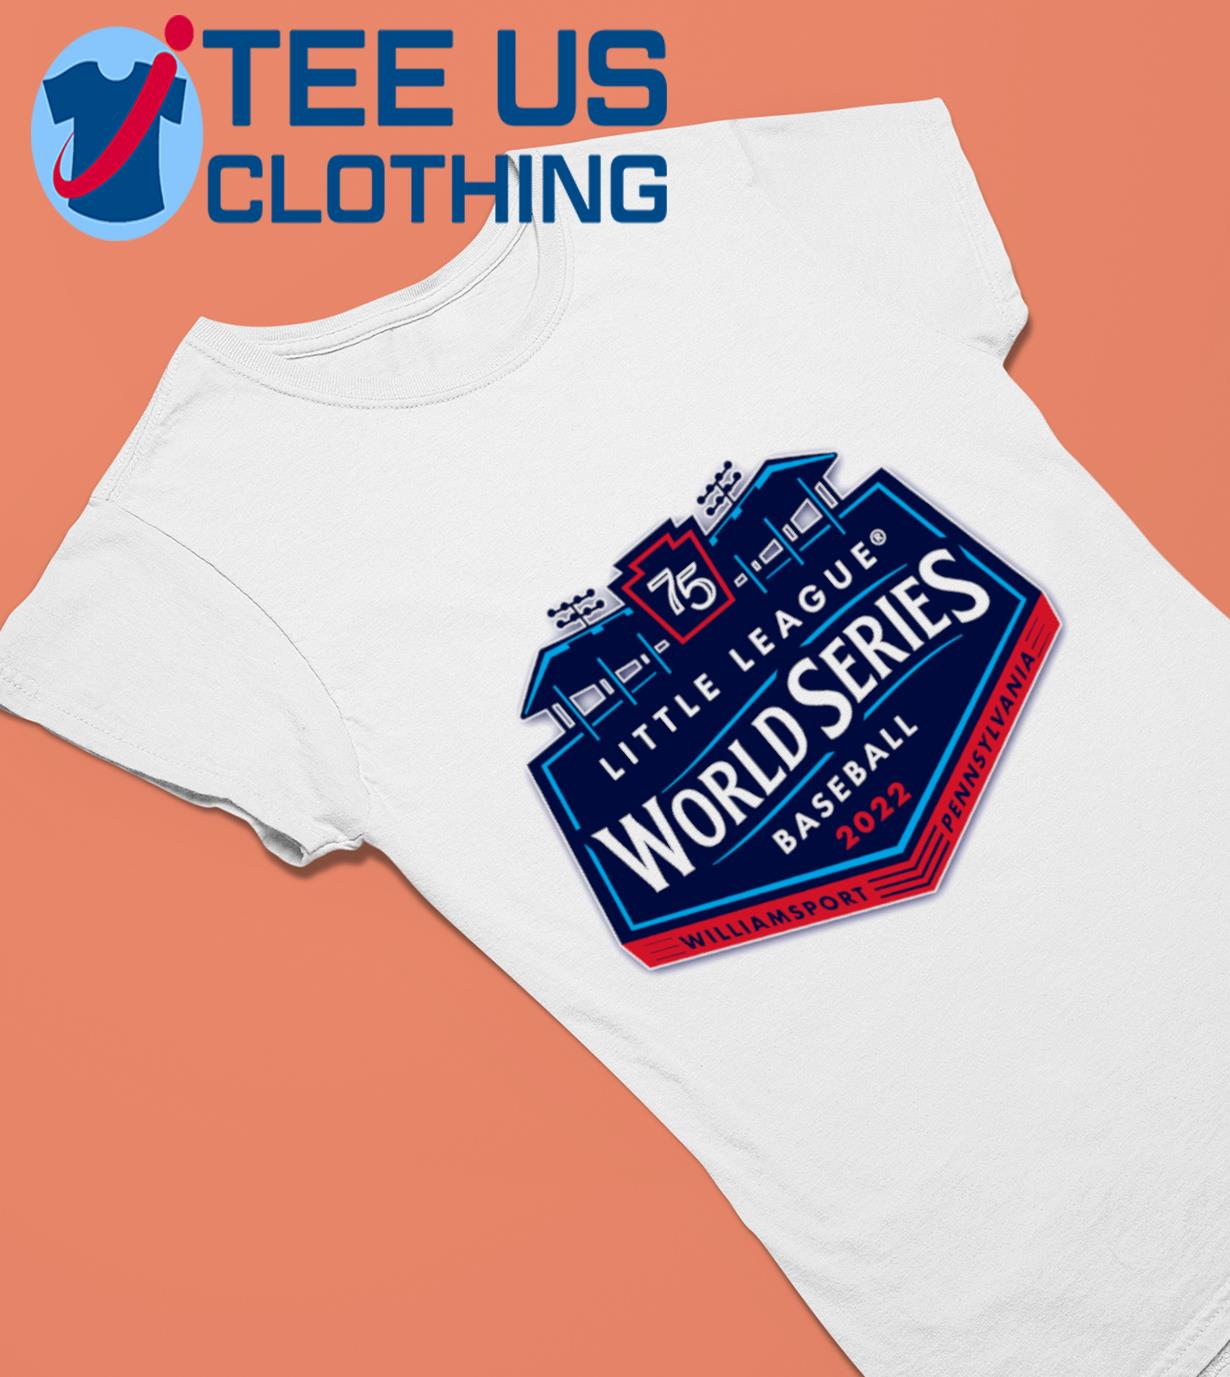 Little League World Series Baseball 2022 busted logo shirt, hoodie